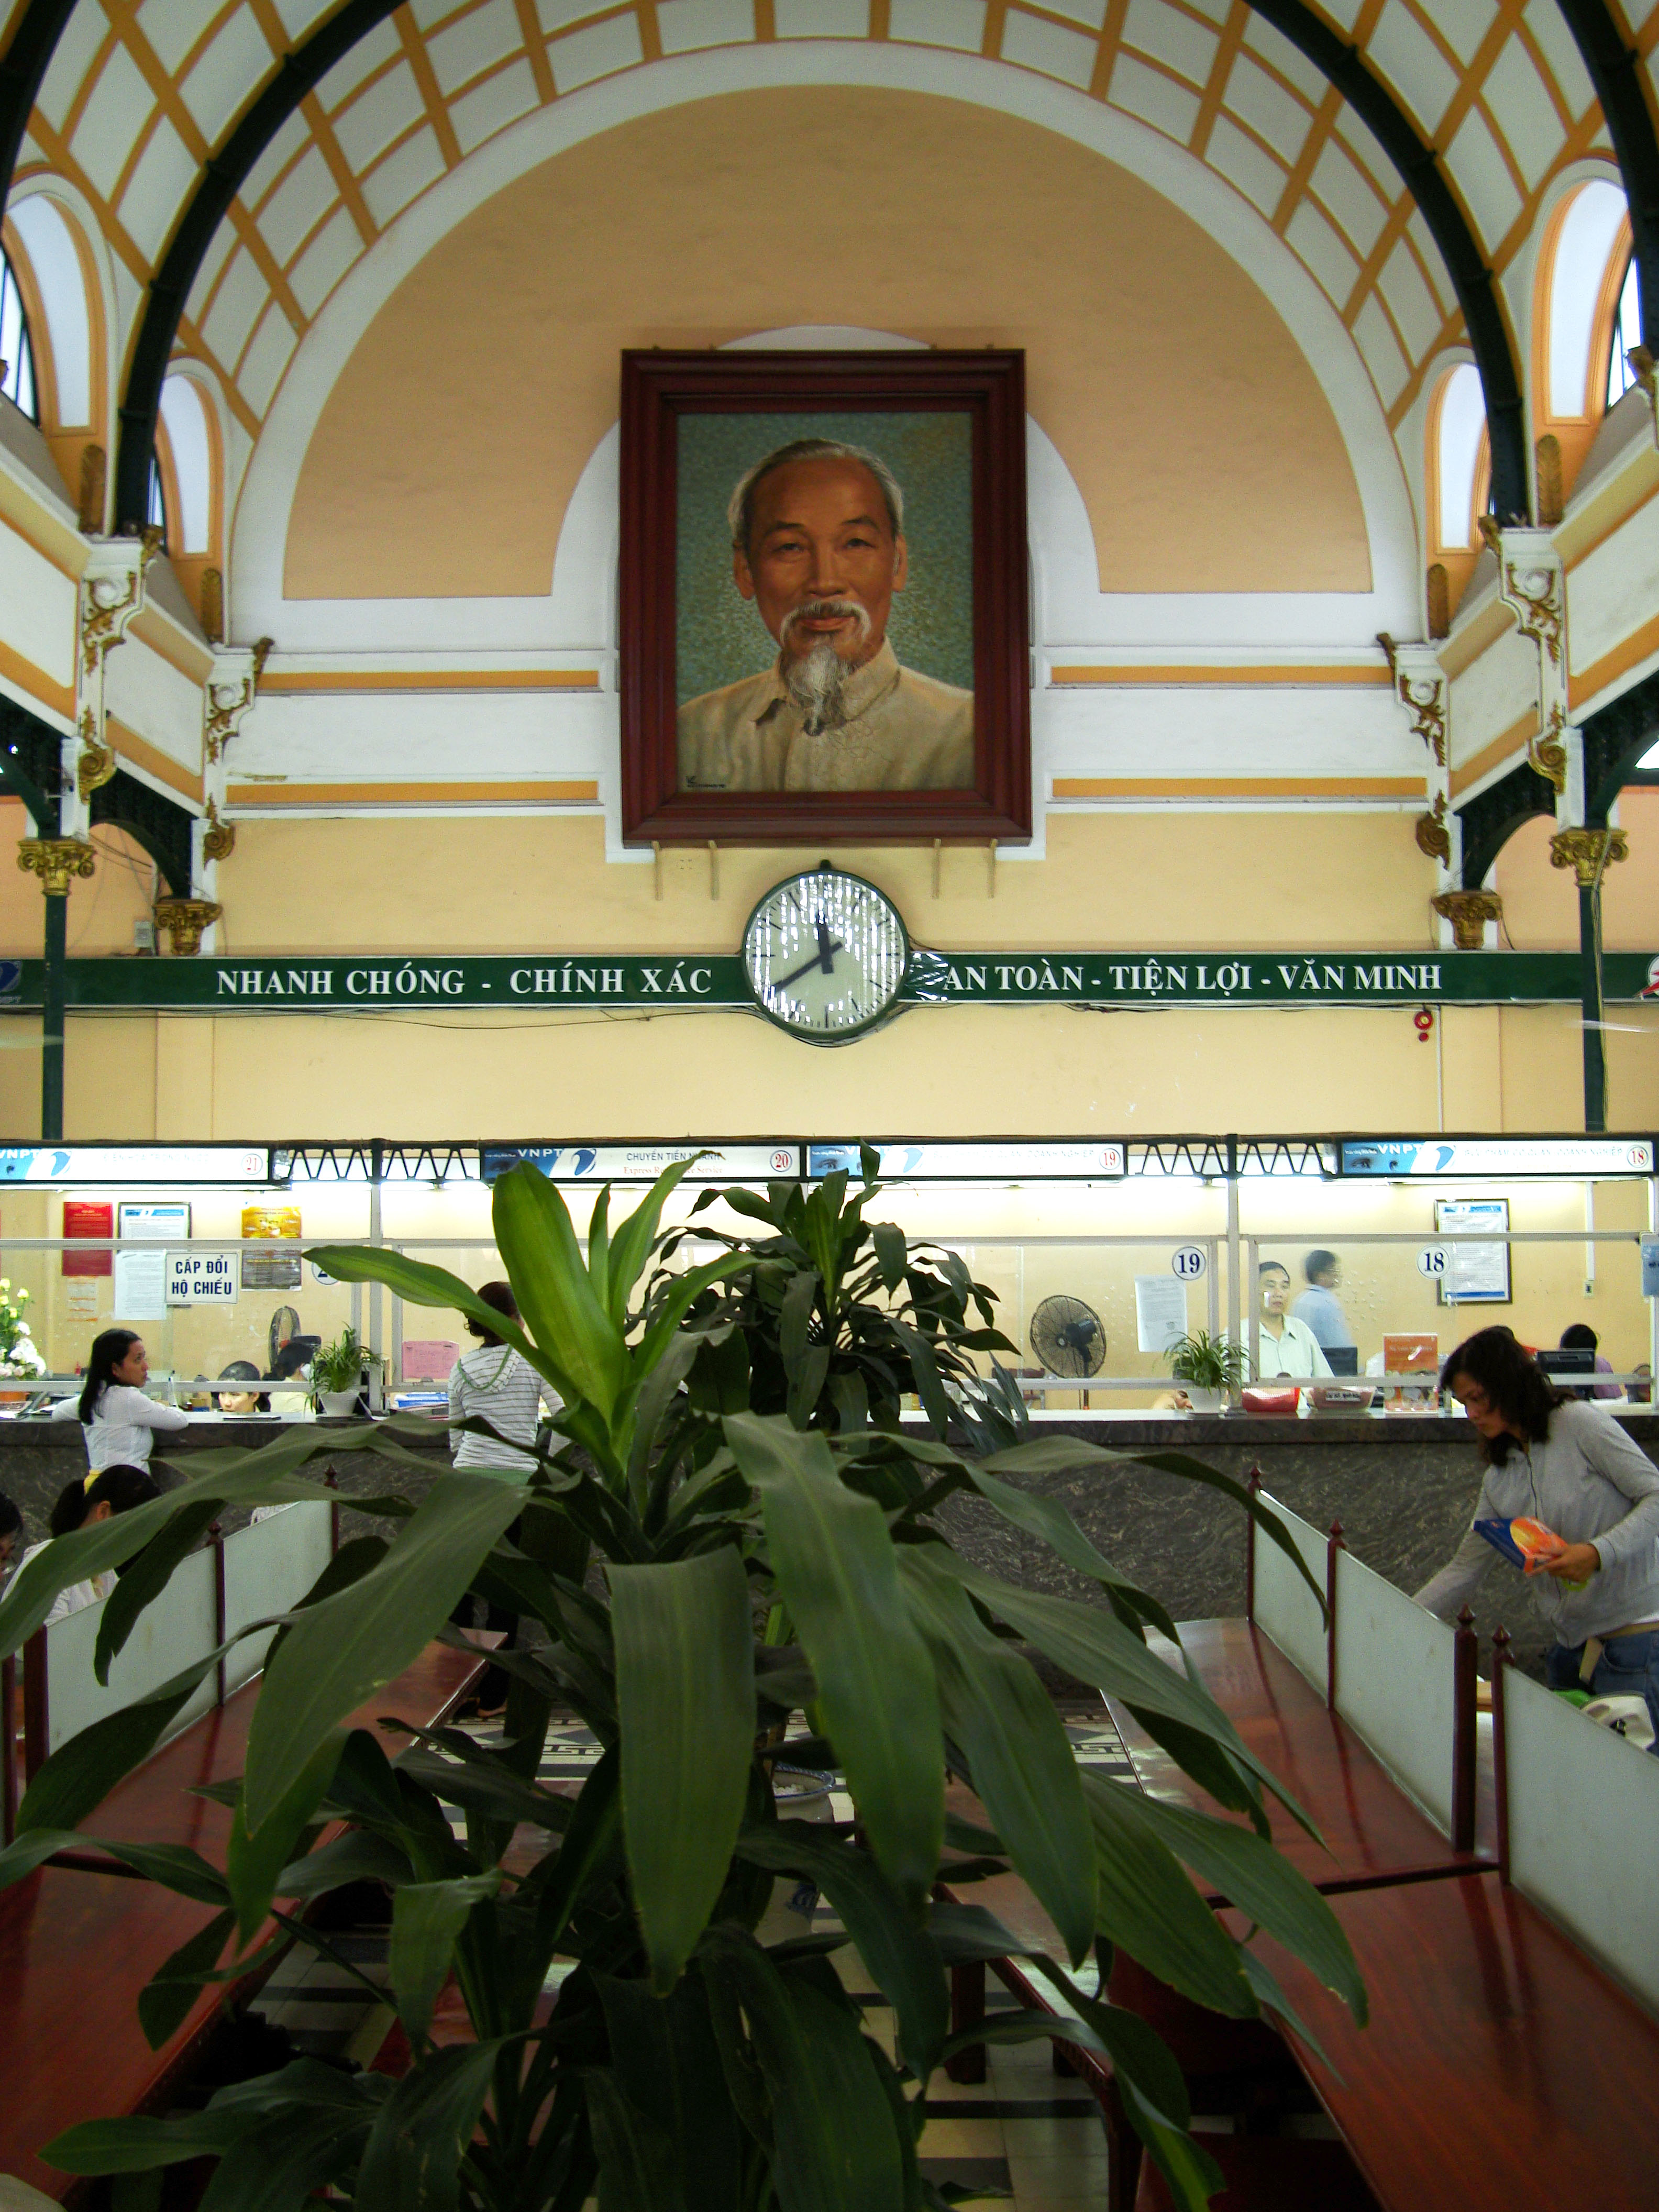 Main Post Office District 1 Ho Chi Minh City Interior Feb 2009 08